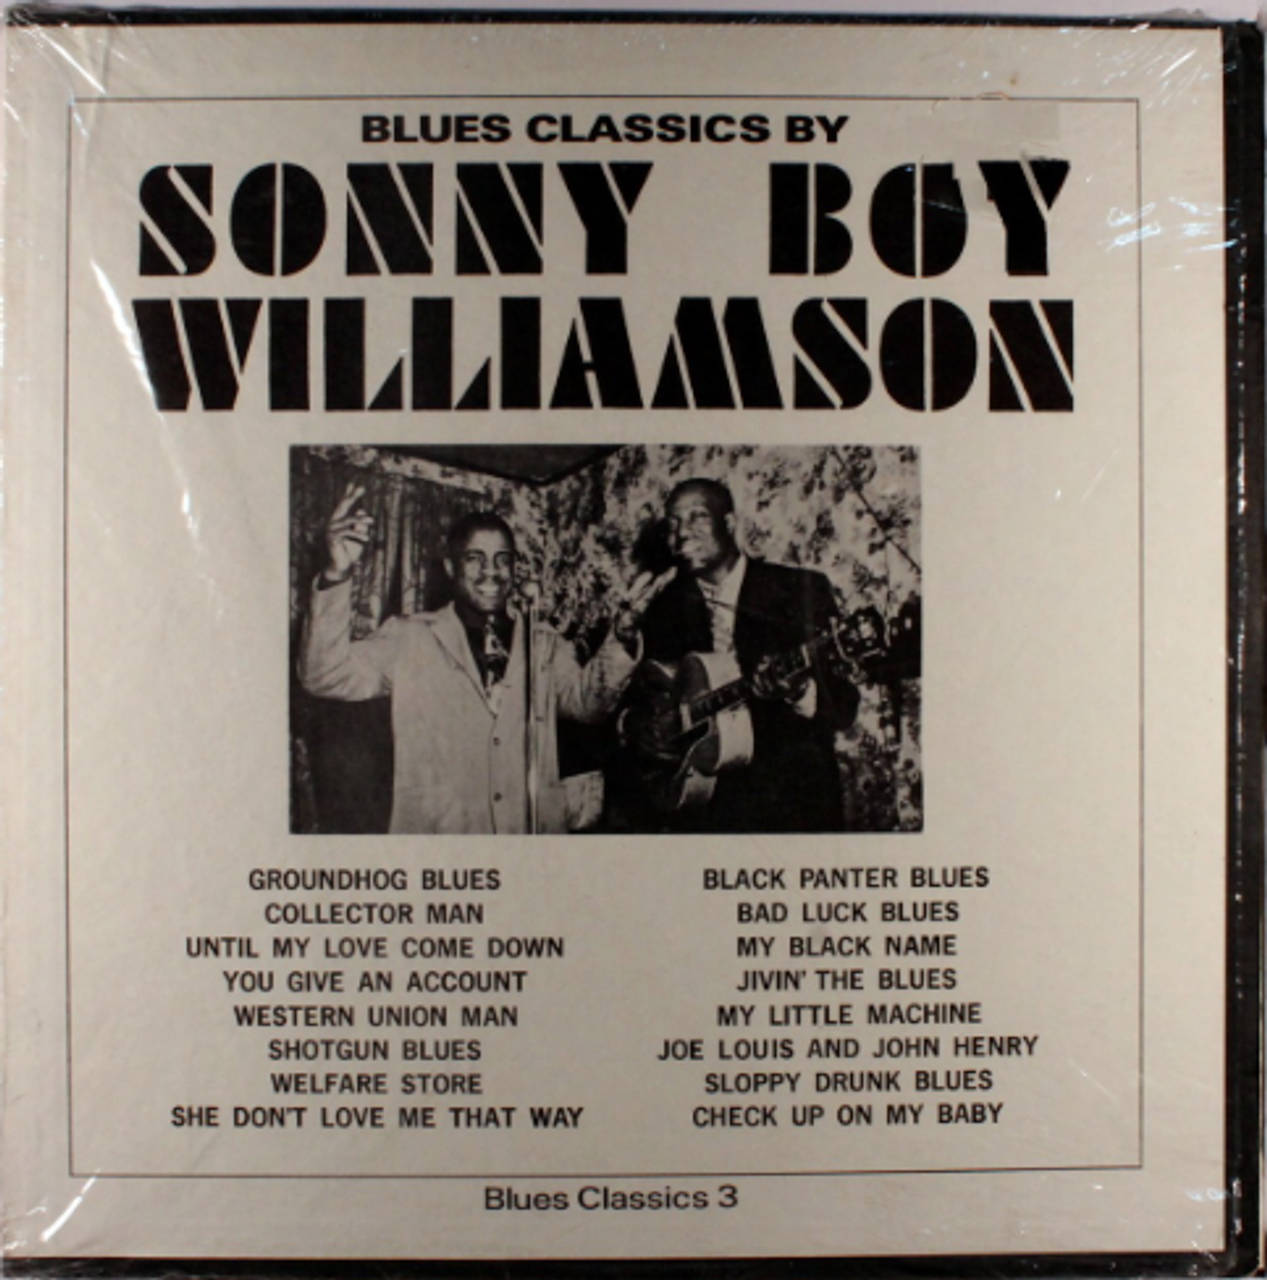 Sonny Boy Williamson 1267 X 1280 Wallpaper